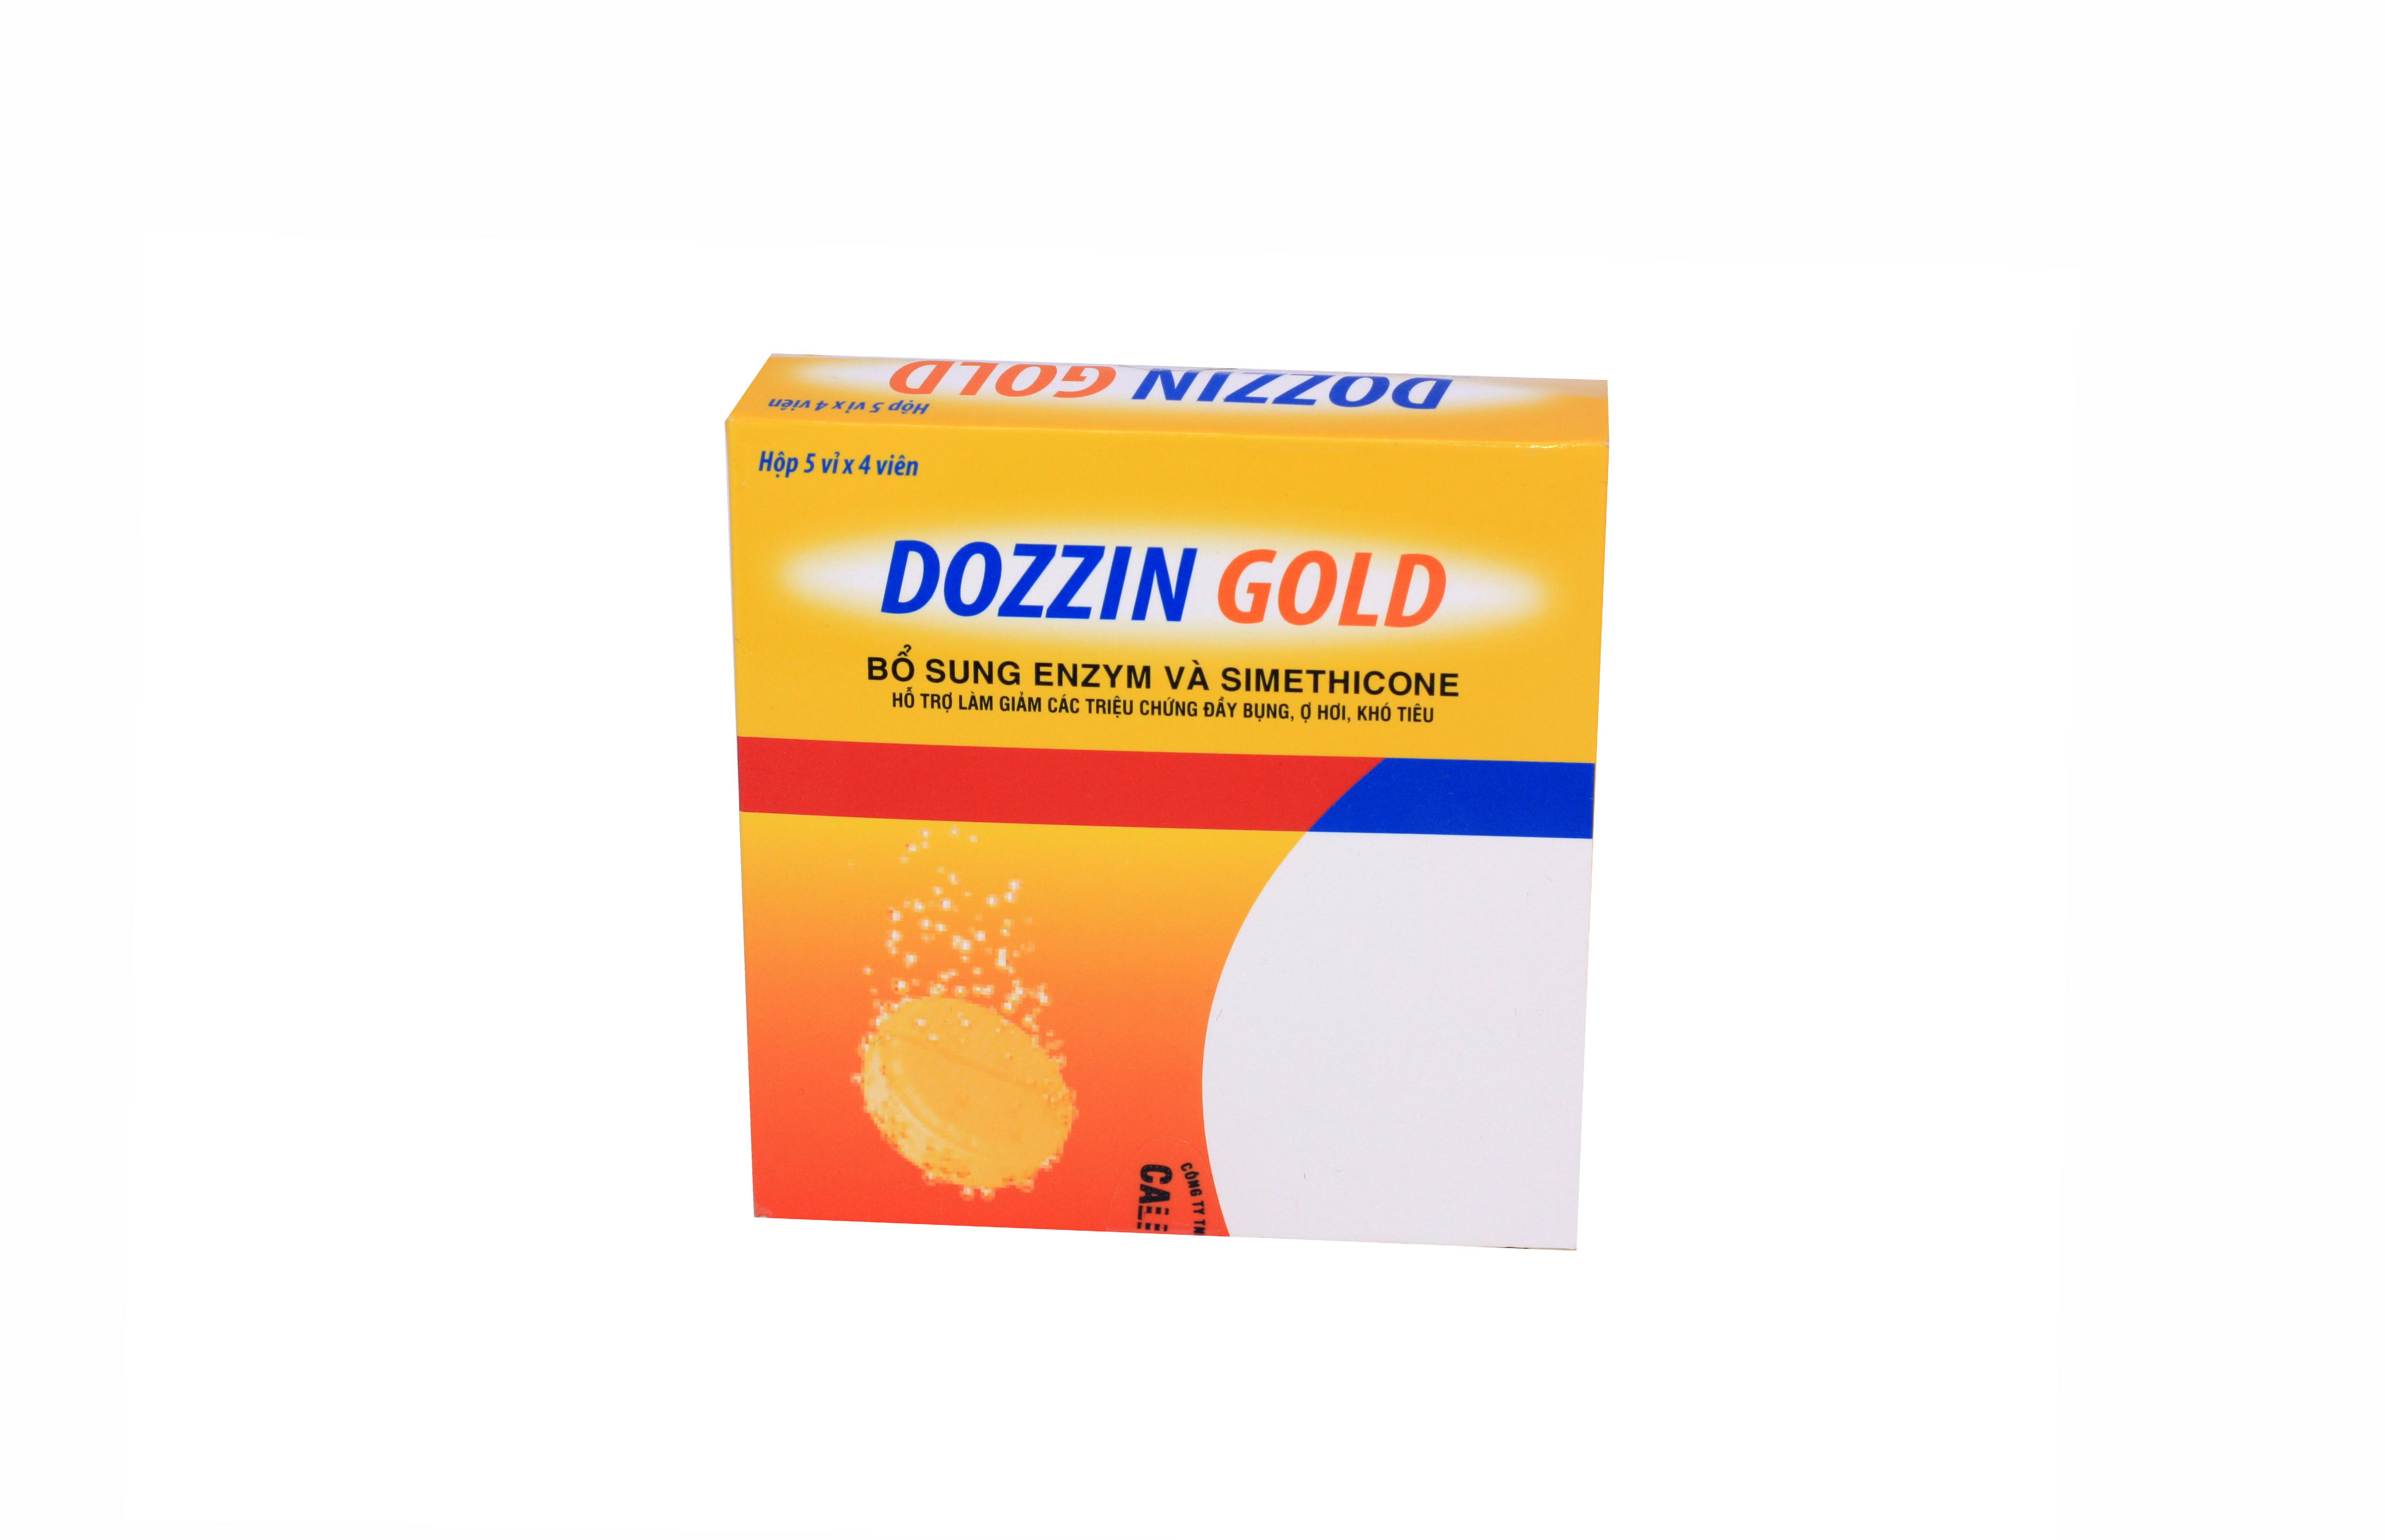 Dozzin Gold (Papain, Alpha amylase, Simethicone) Diamond (H/20v)